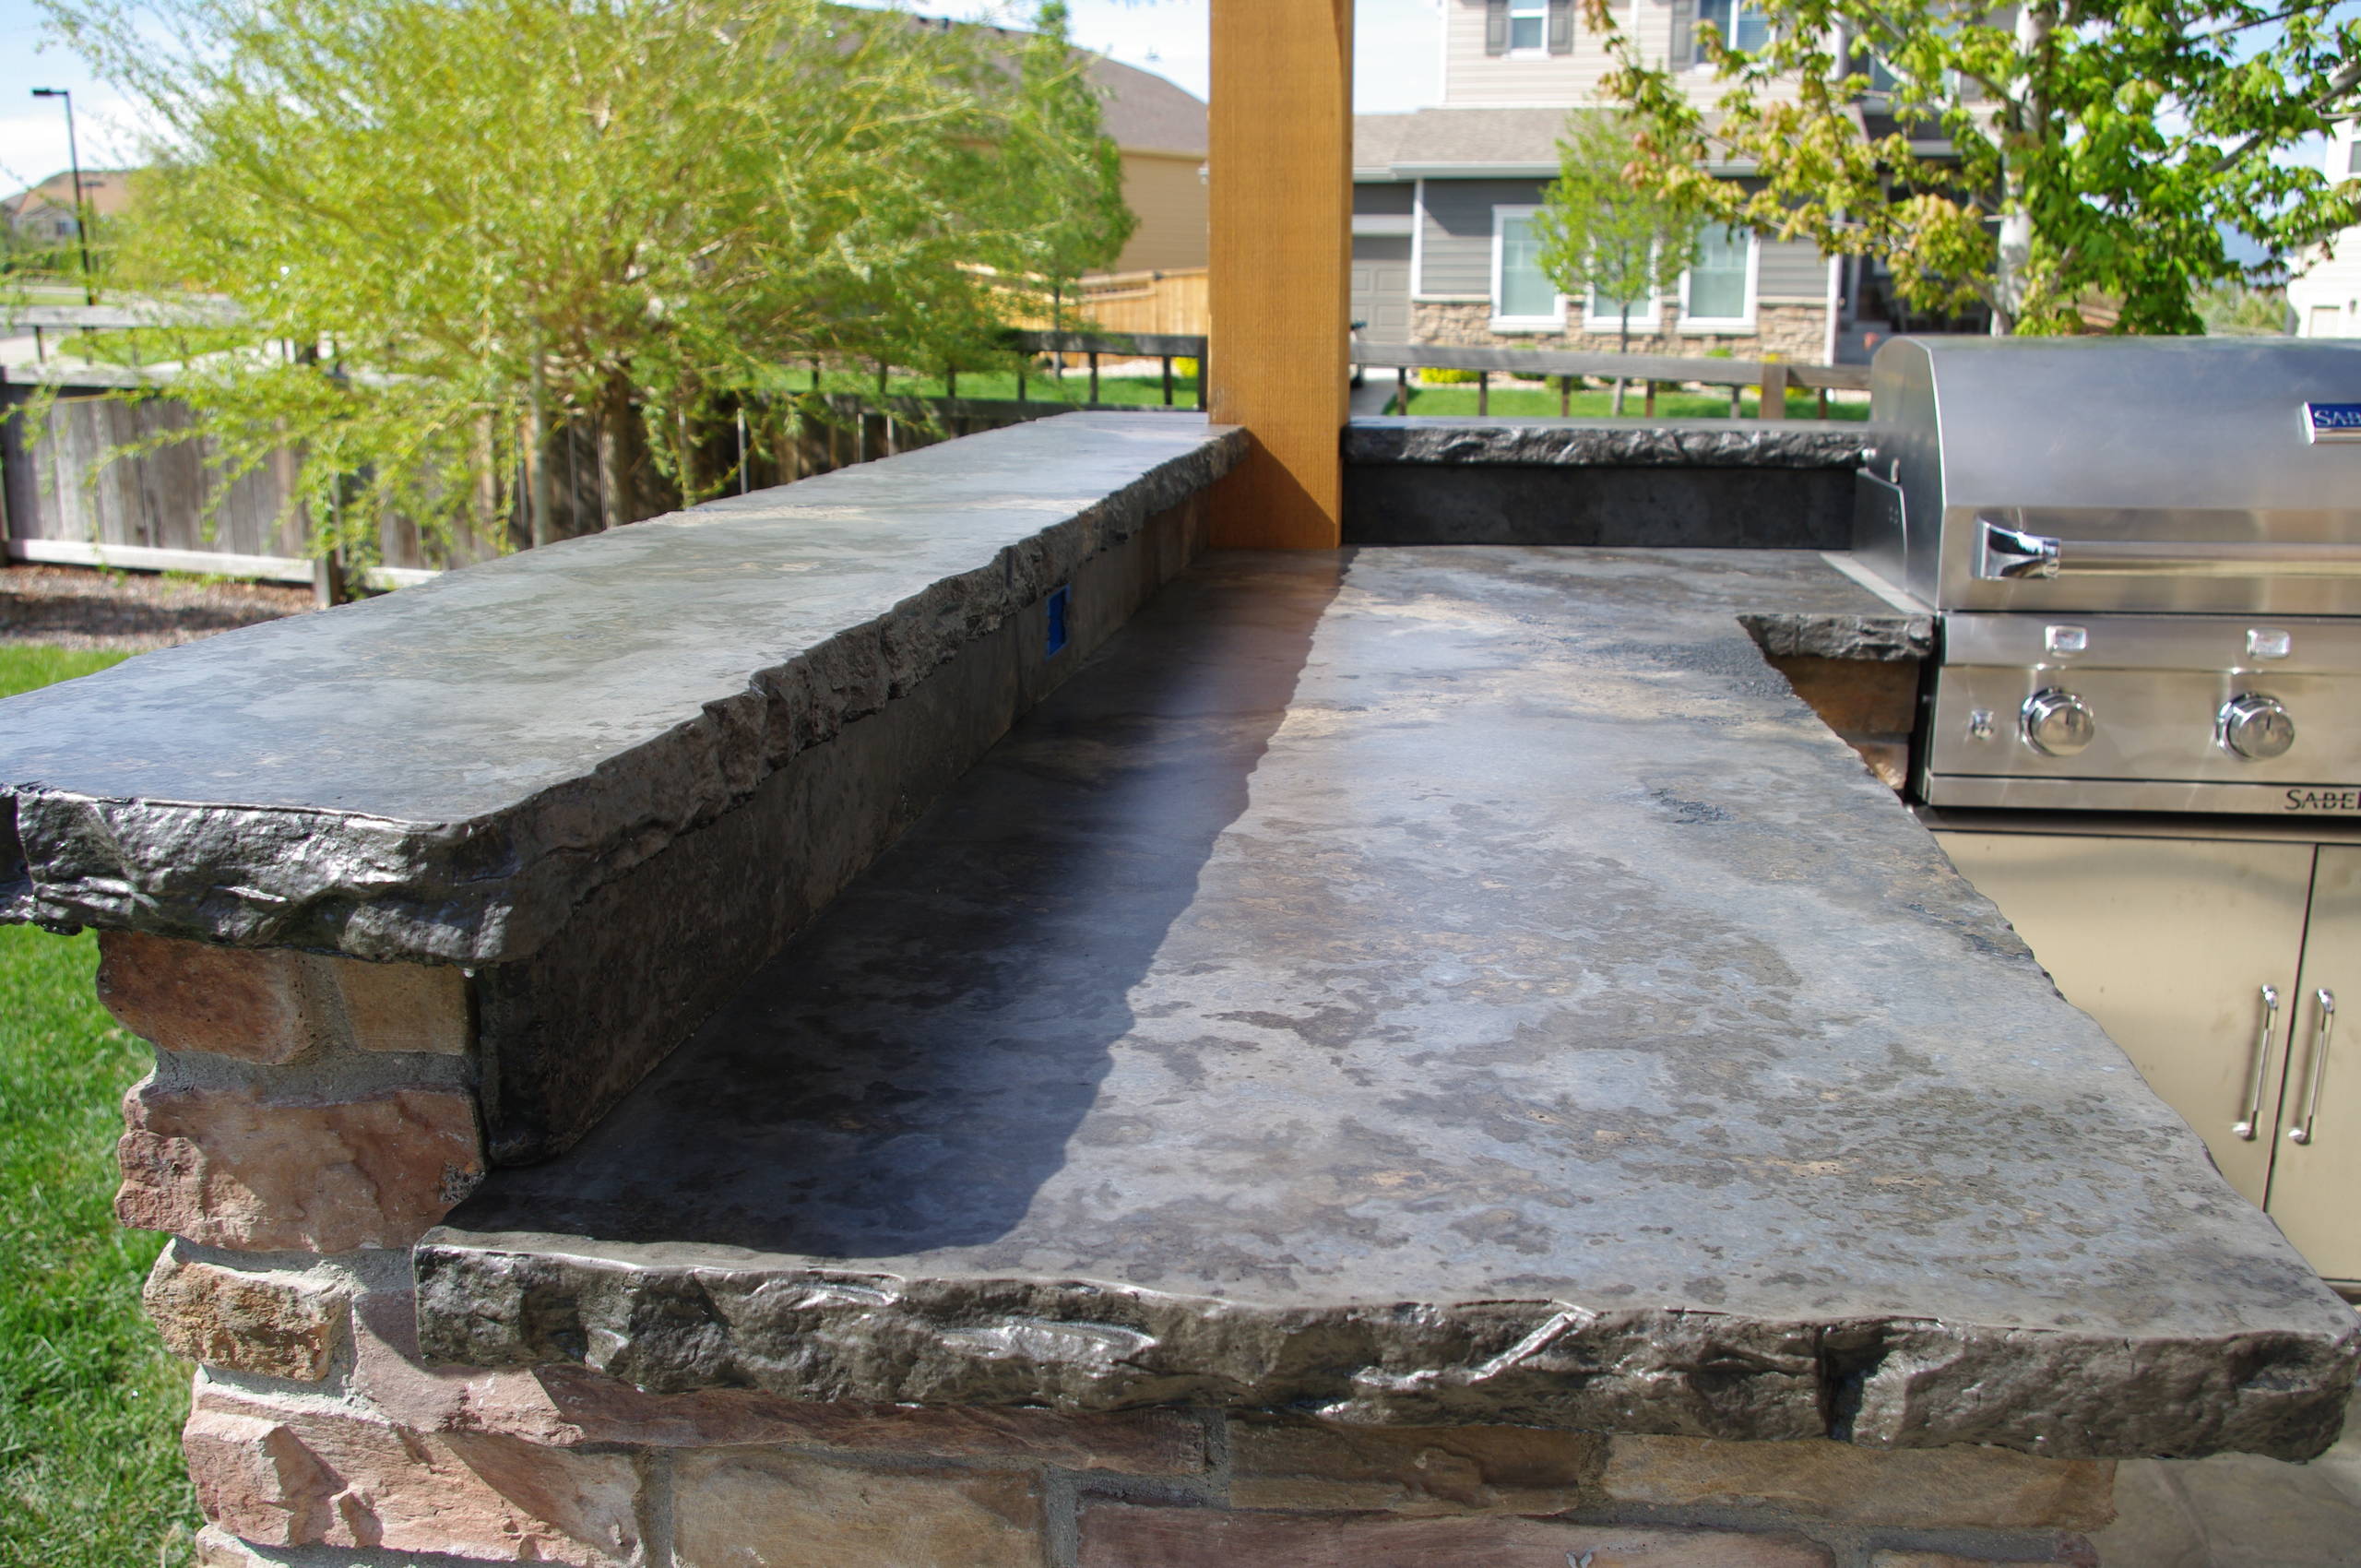 Build An Outdoor Bar With Concrete Blocks